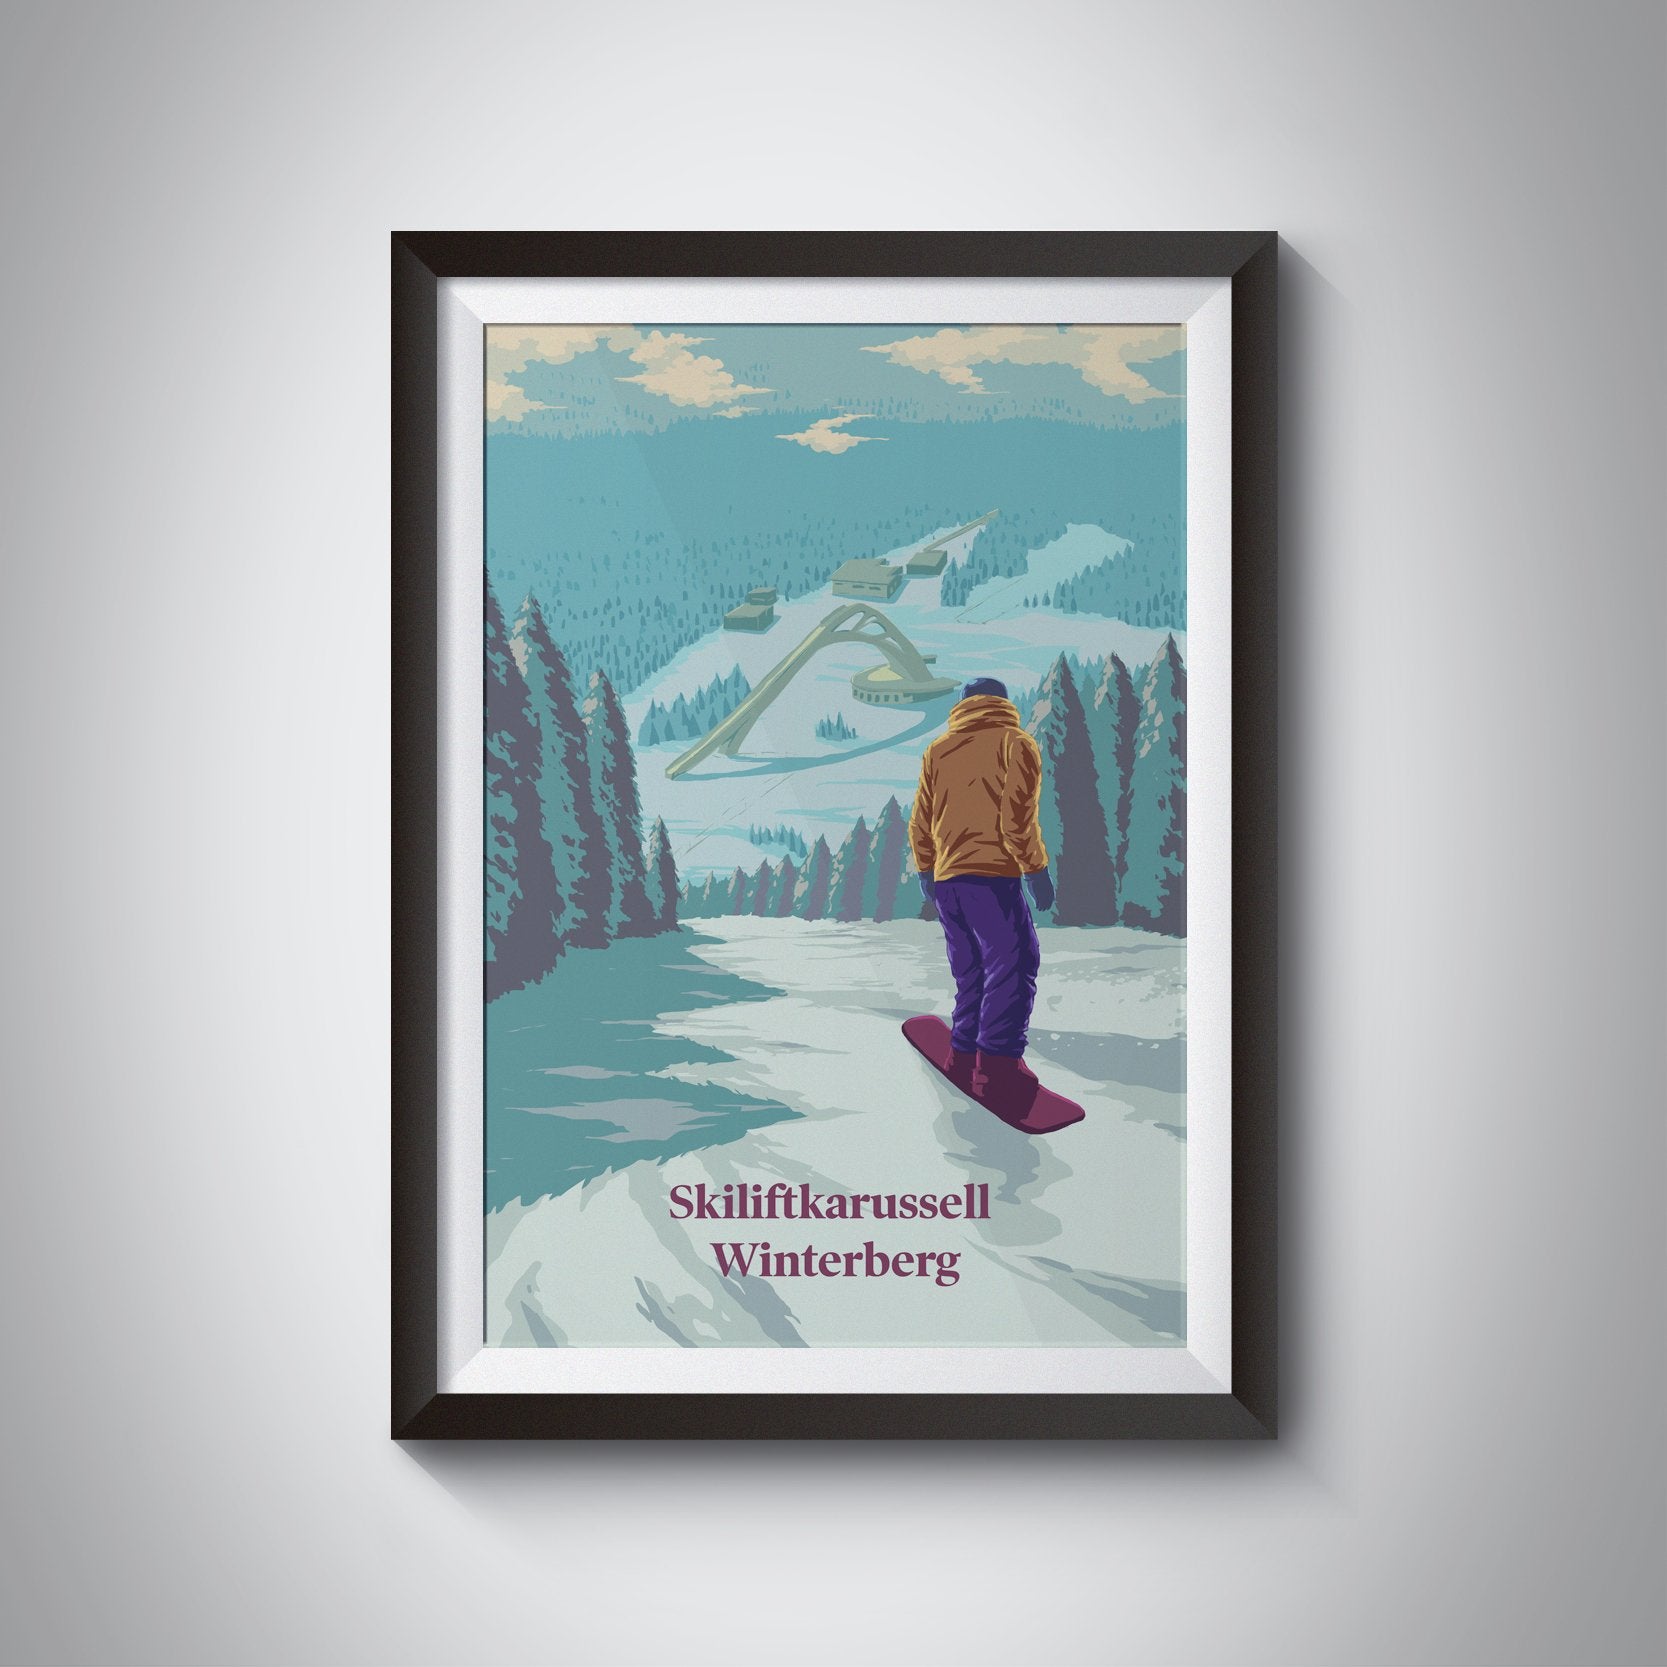 Skiliftkarussell Winterberg Germany Snowboarding Travel Poster